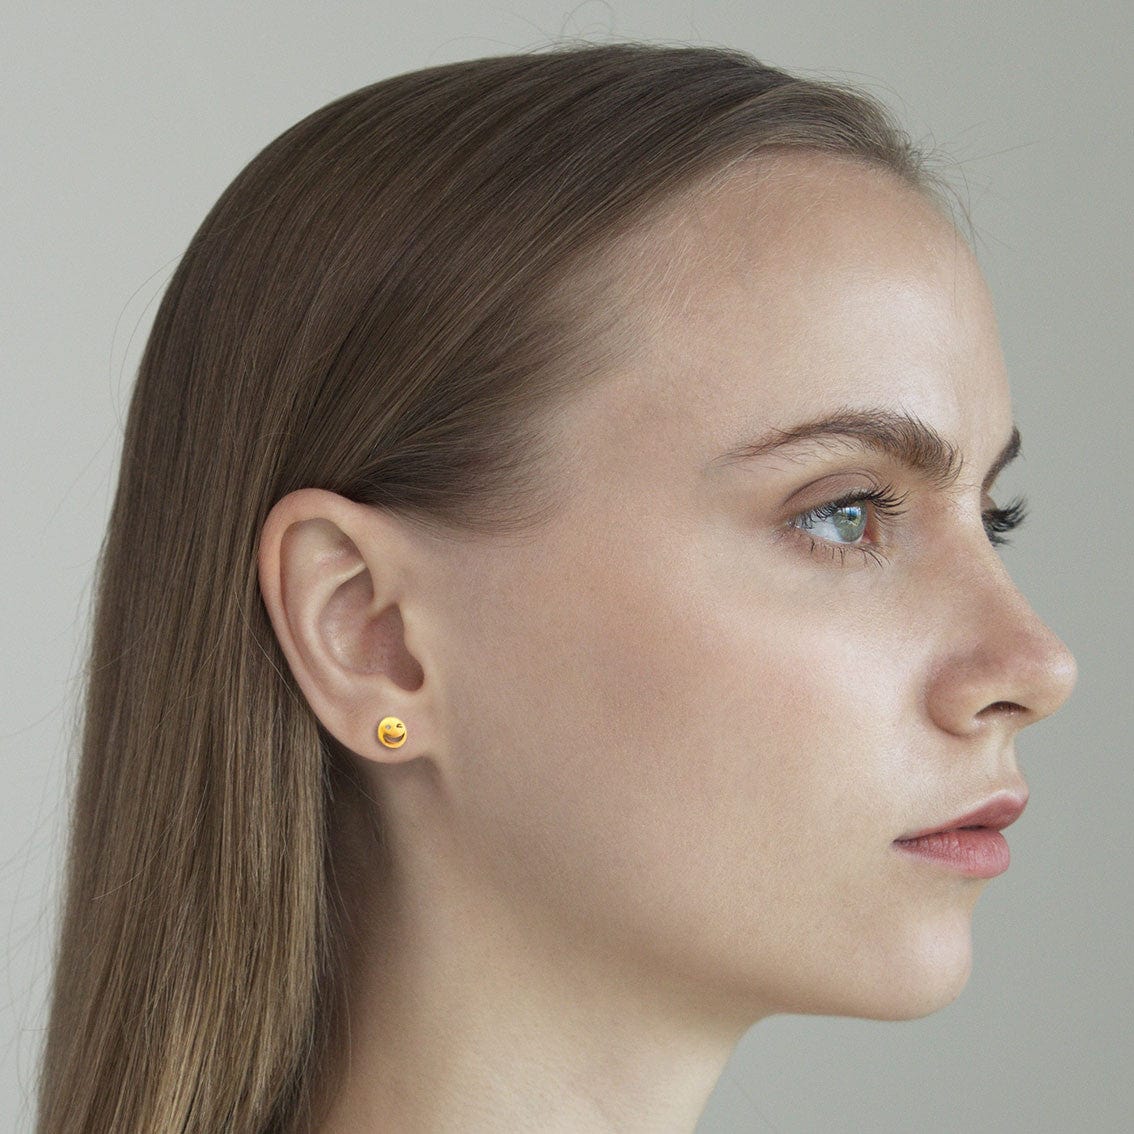 TAI JEWELRY Earrings Simple Gold Winky Face Post Stud